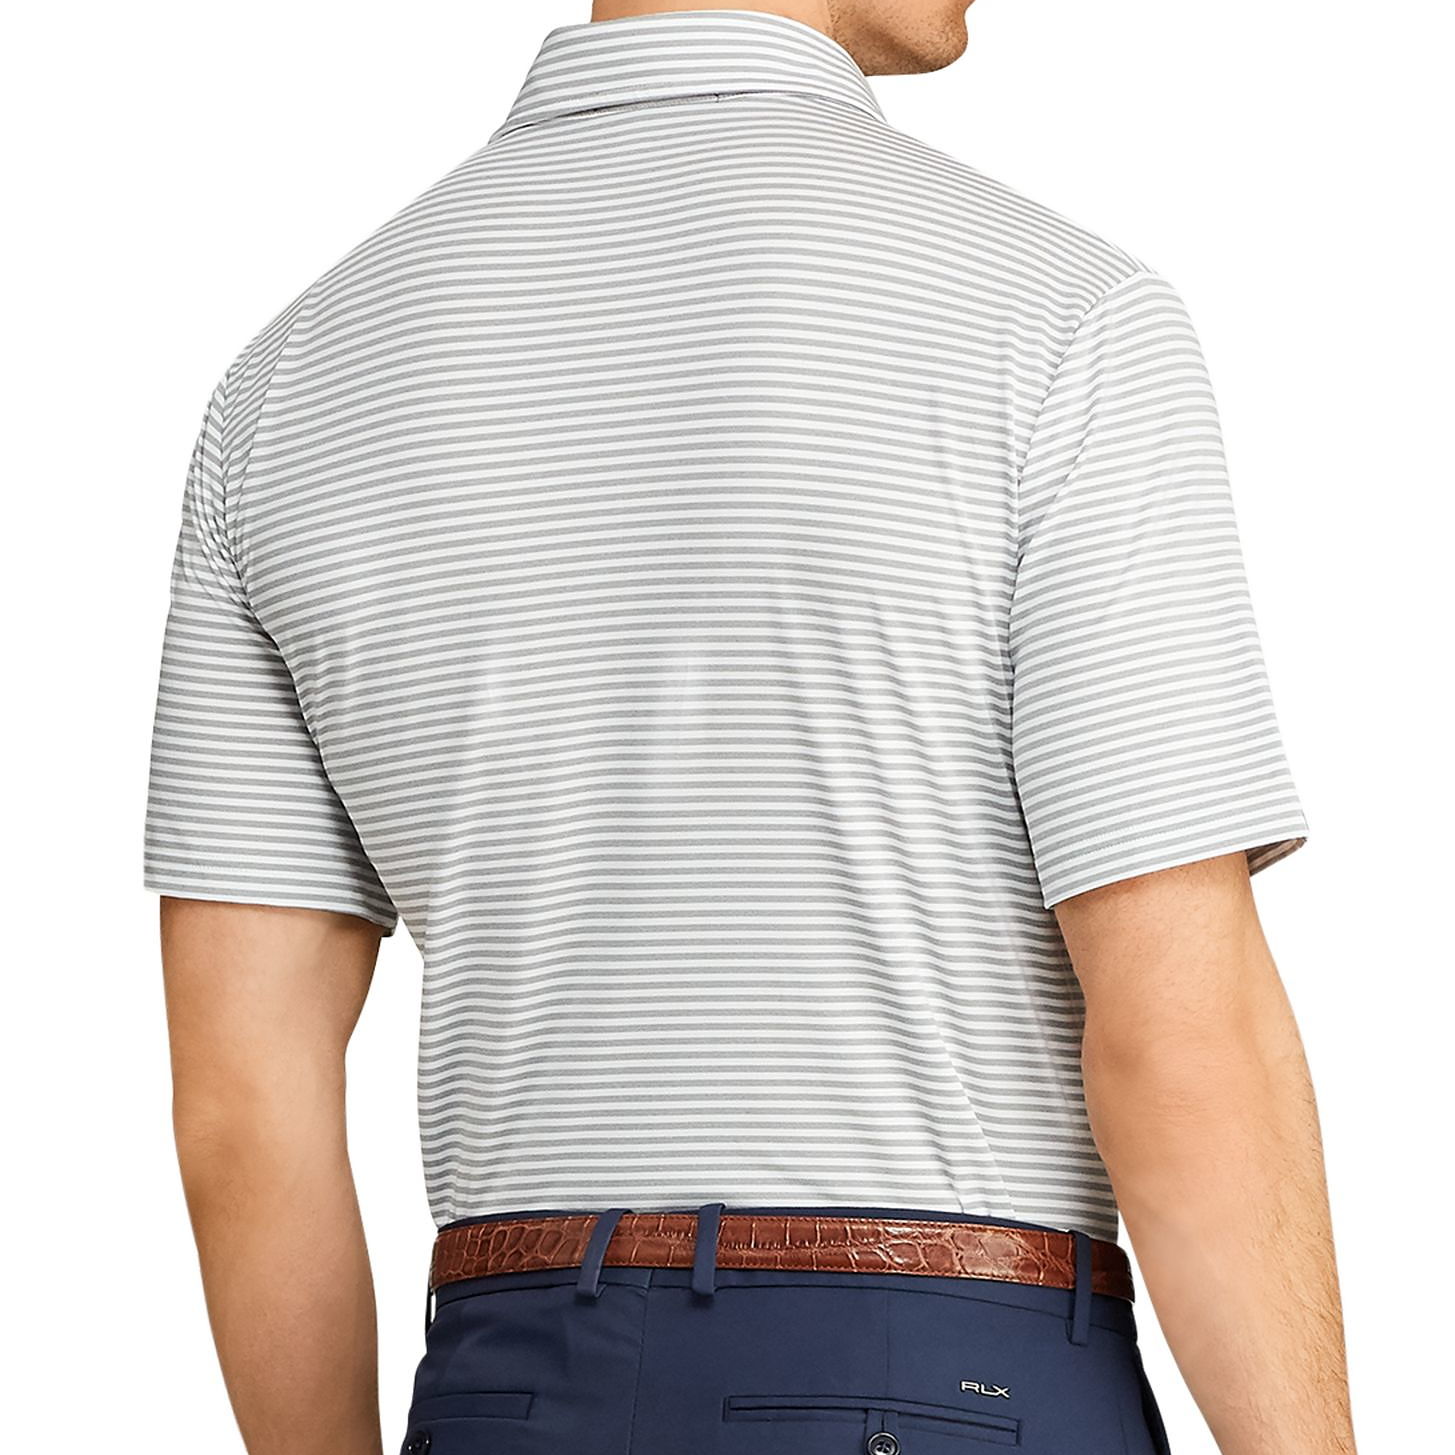 RLX Golf Ralph Lauren Mens Striped Moisture Wicking Polo Shirt (Large, Grey) - image 2 of 2